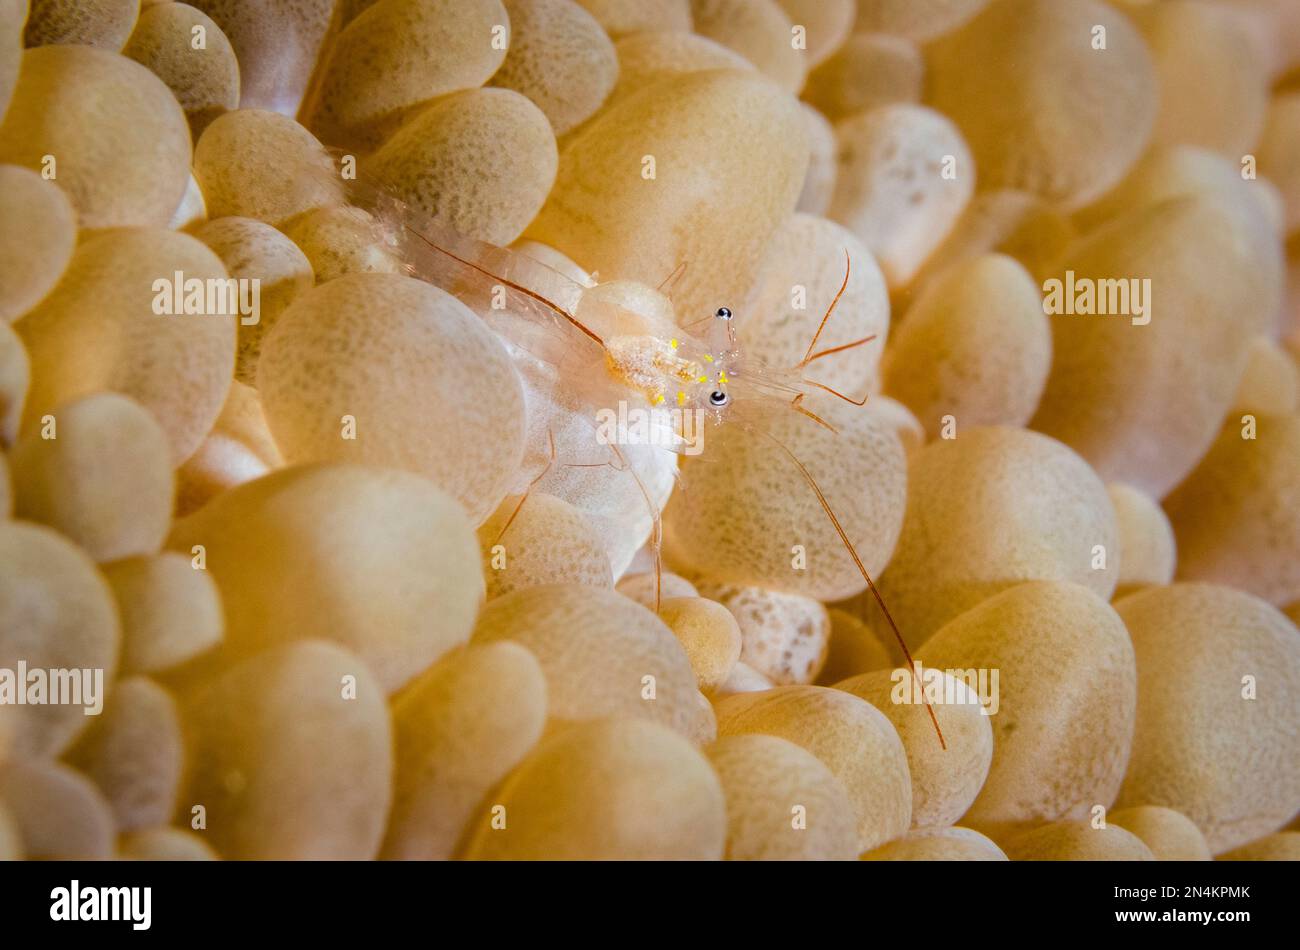 Bubble Coral Shrimp, Vir sp, in Bubble Coral, Plerogyra sinuosa, Loleo dive site, Weda, Halmahera, North Maluku, Indonesia, Halmahera Sea Stock Photo